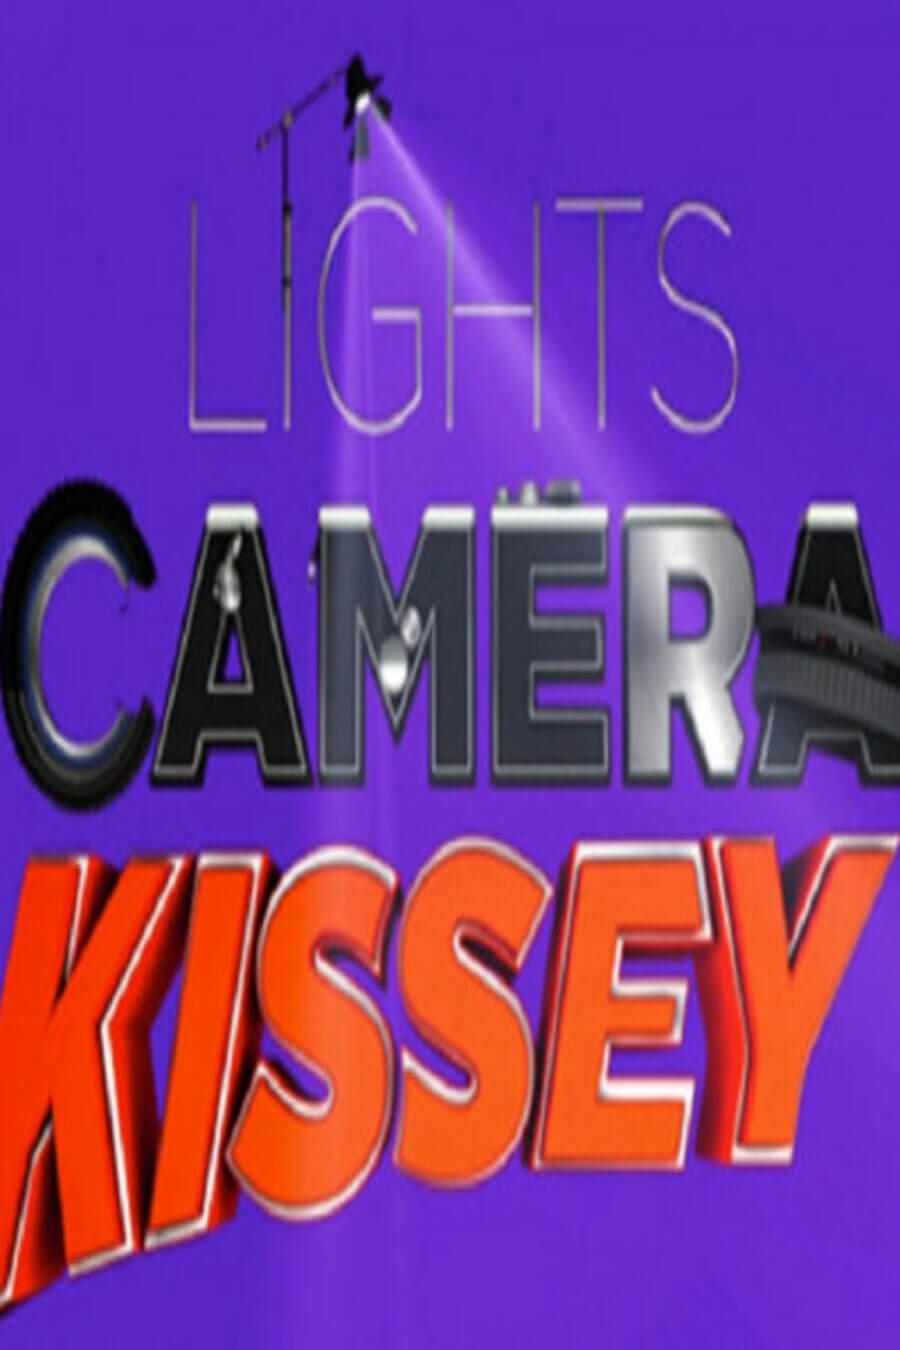 TV ratings for Lights Camera Kissey in Japan. SonyLIV TV series